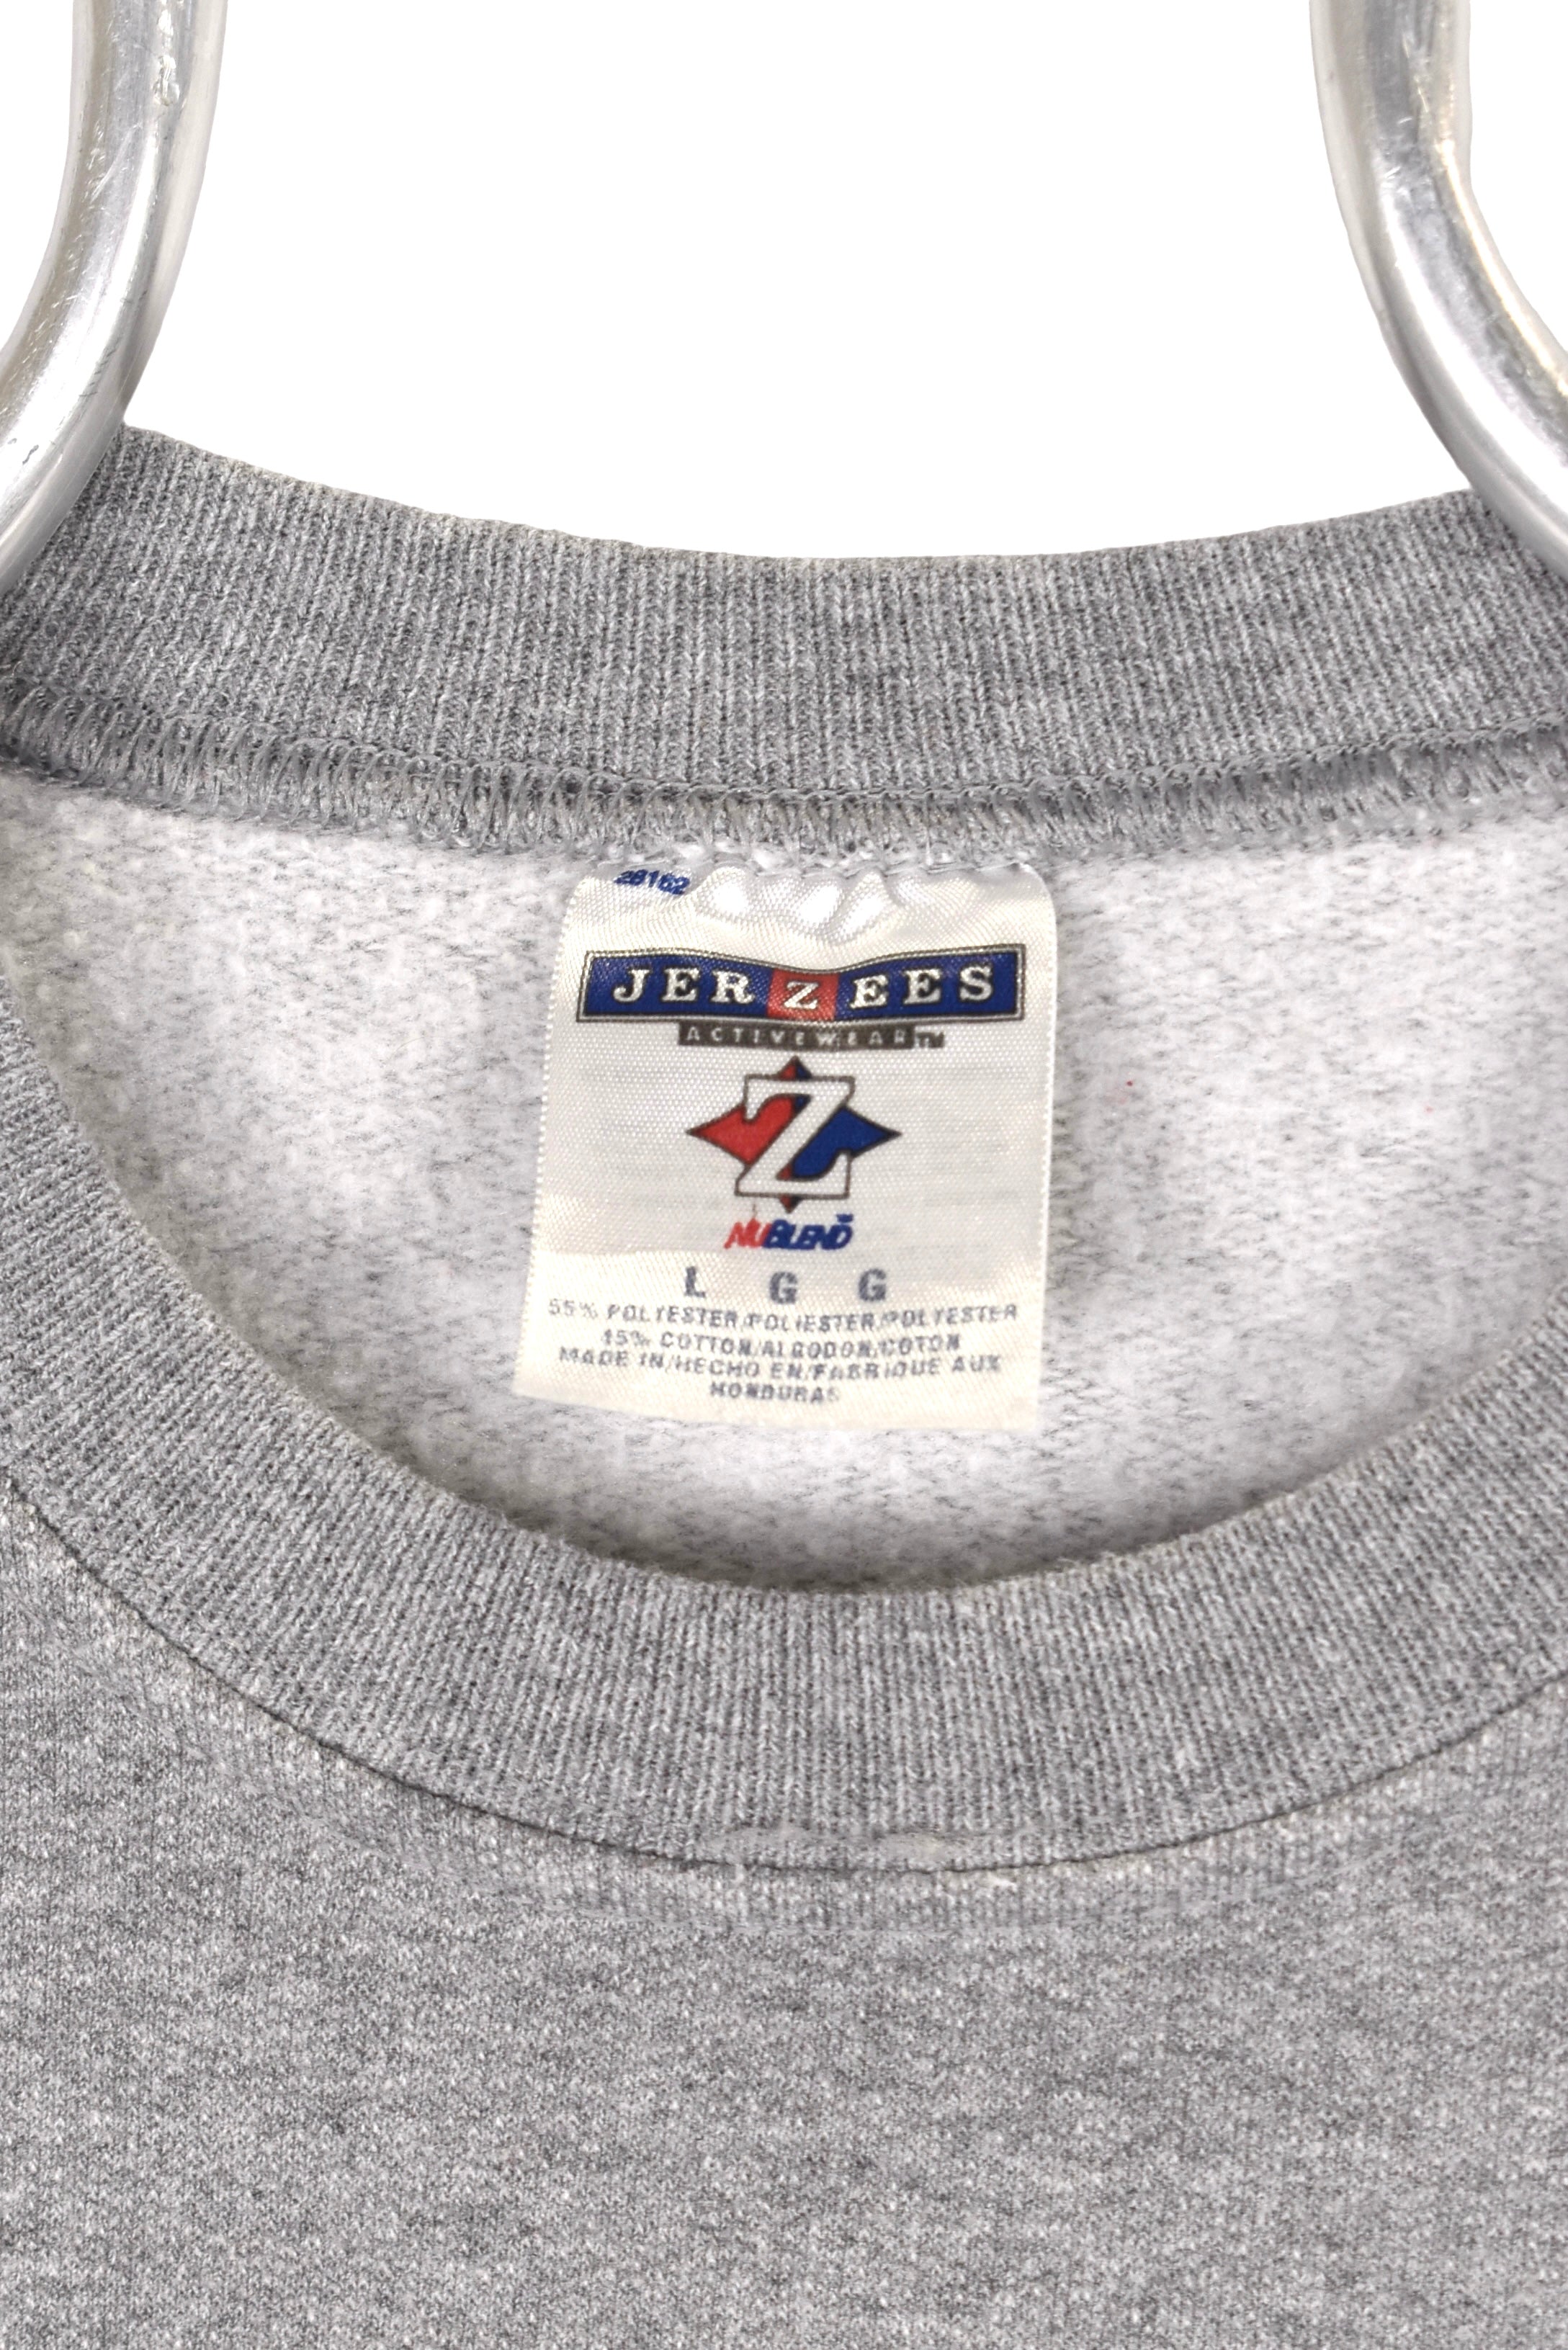 Vintage Ohio State University sweatshirt Medium, grey graphic crewneck